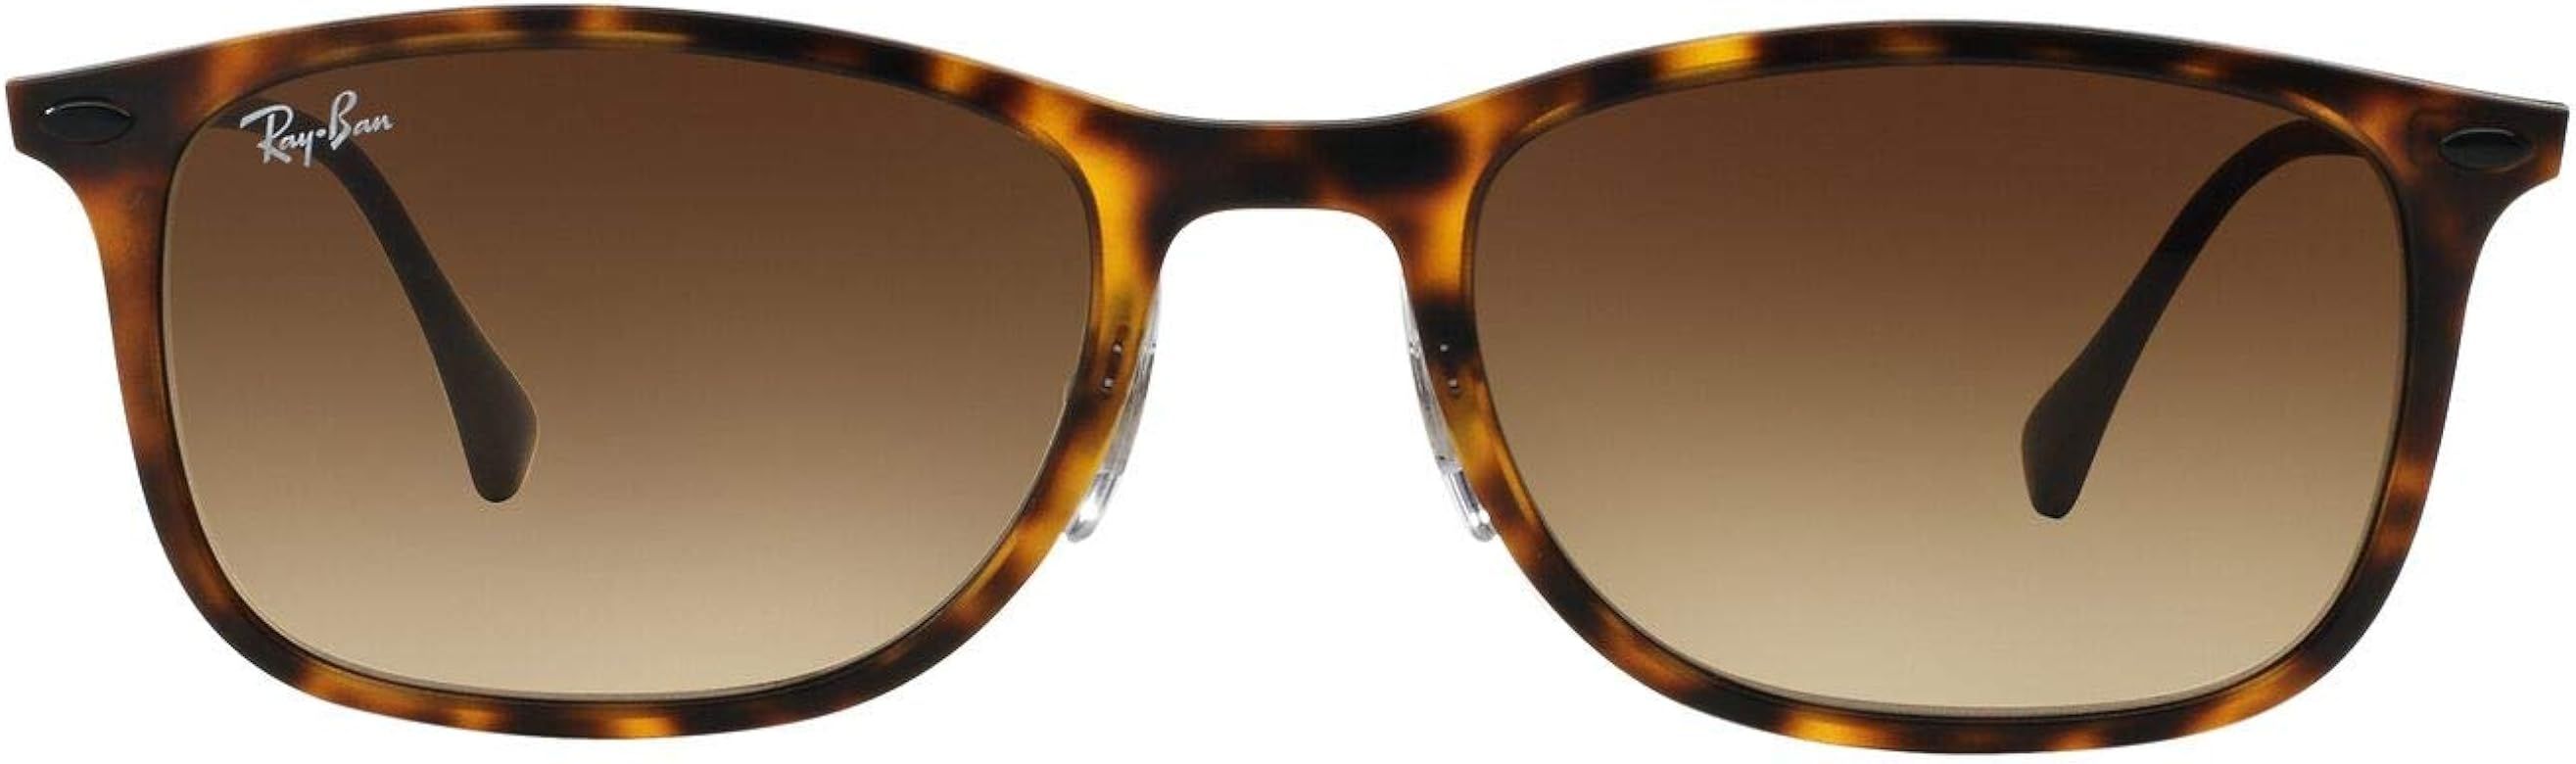 Ray-Ban Light Ray New Wayfarer Sunglasses in Matte Havana RB4225 894/13 52 | Amazon (US)